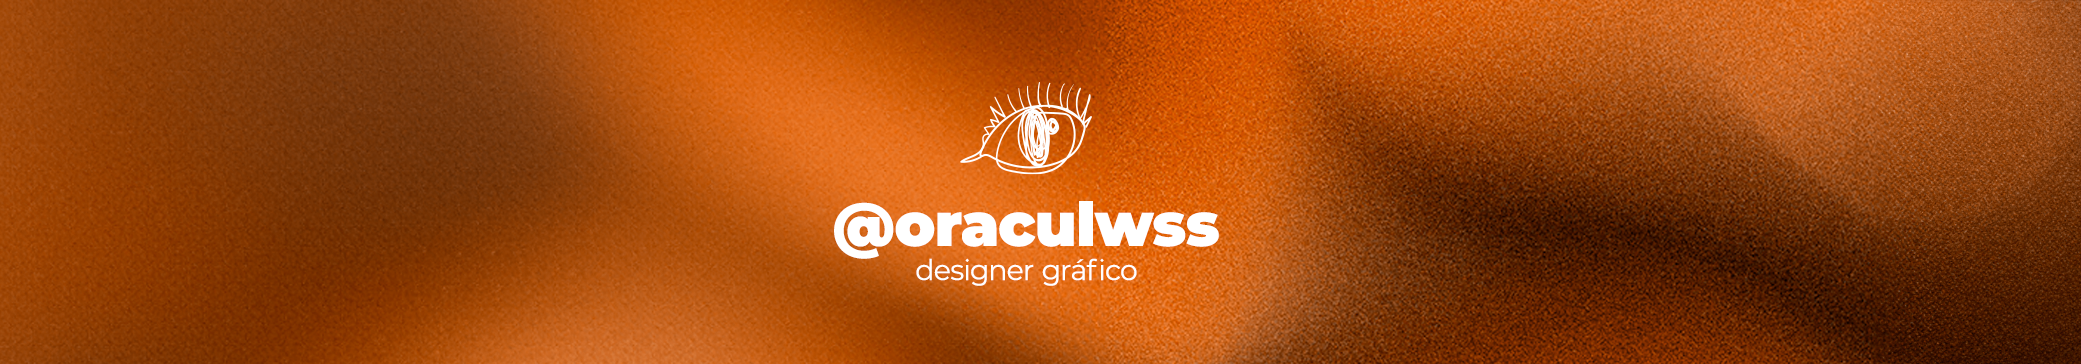 LUCÃO .'s profile banner